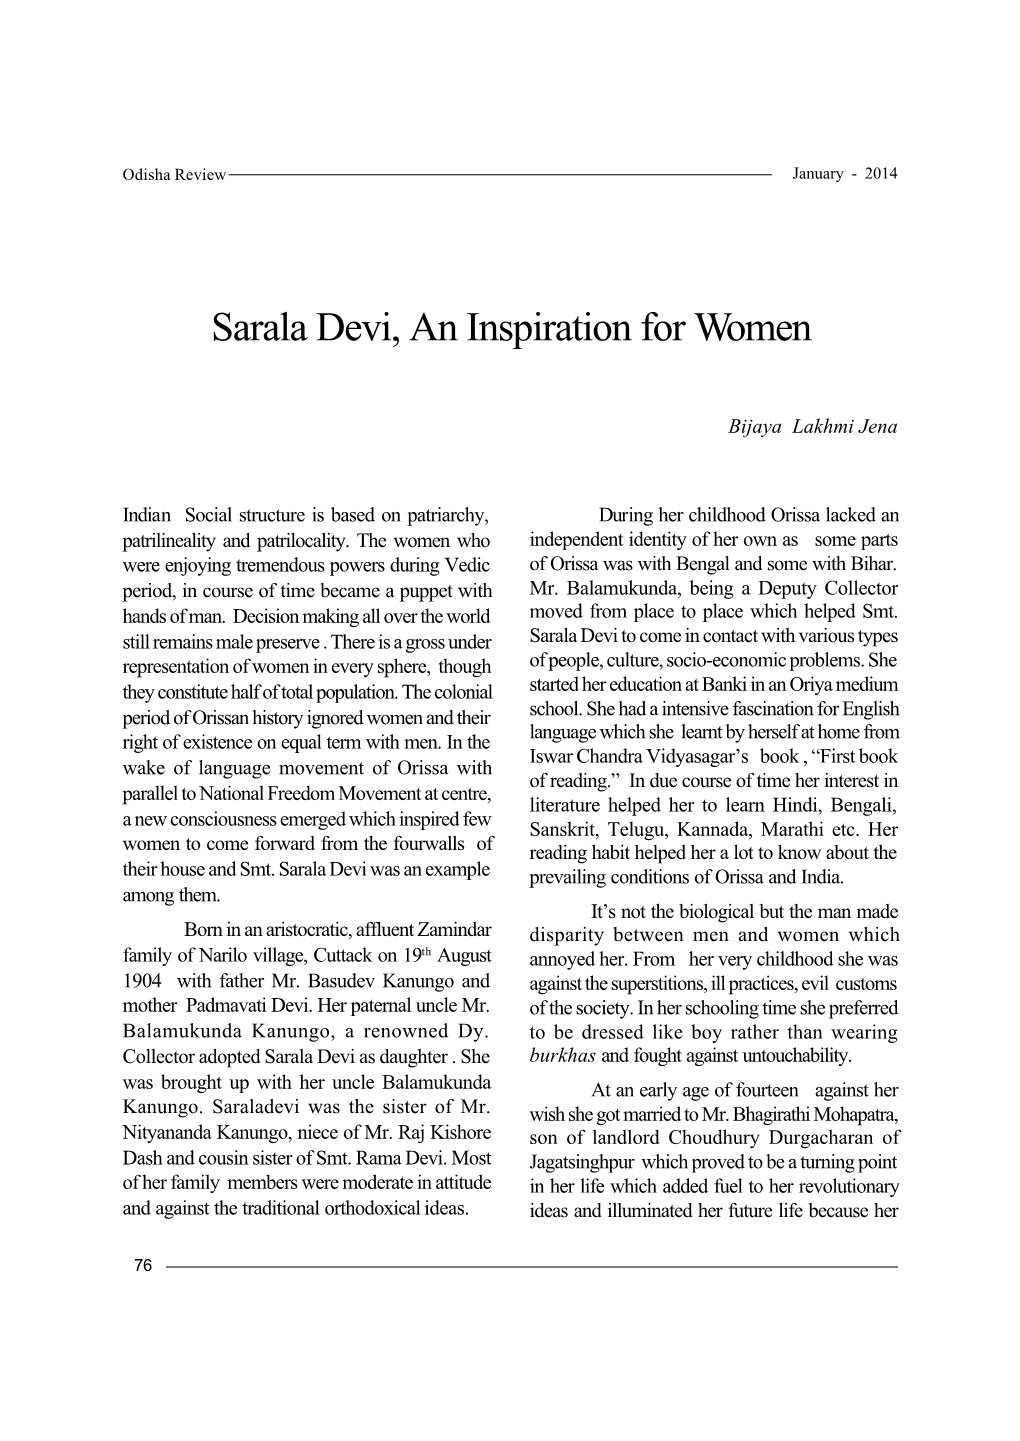 Sarala Devi, an Inspiration for Women